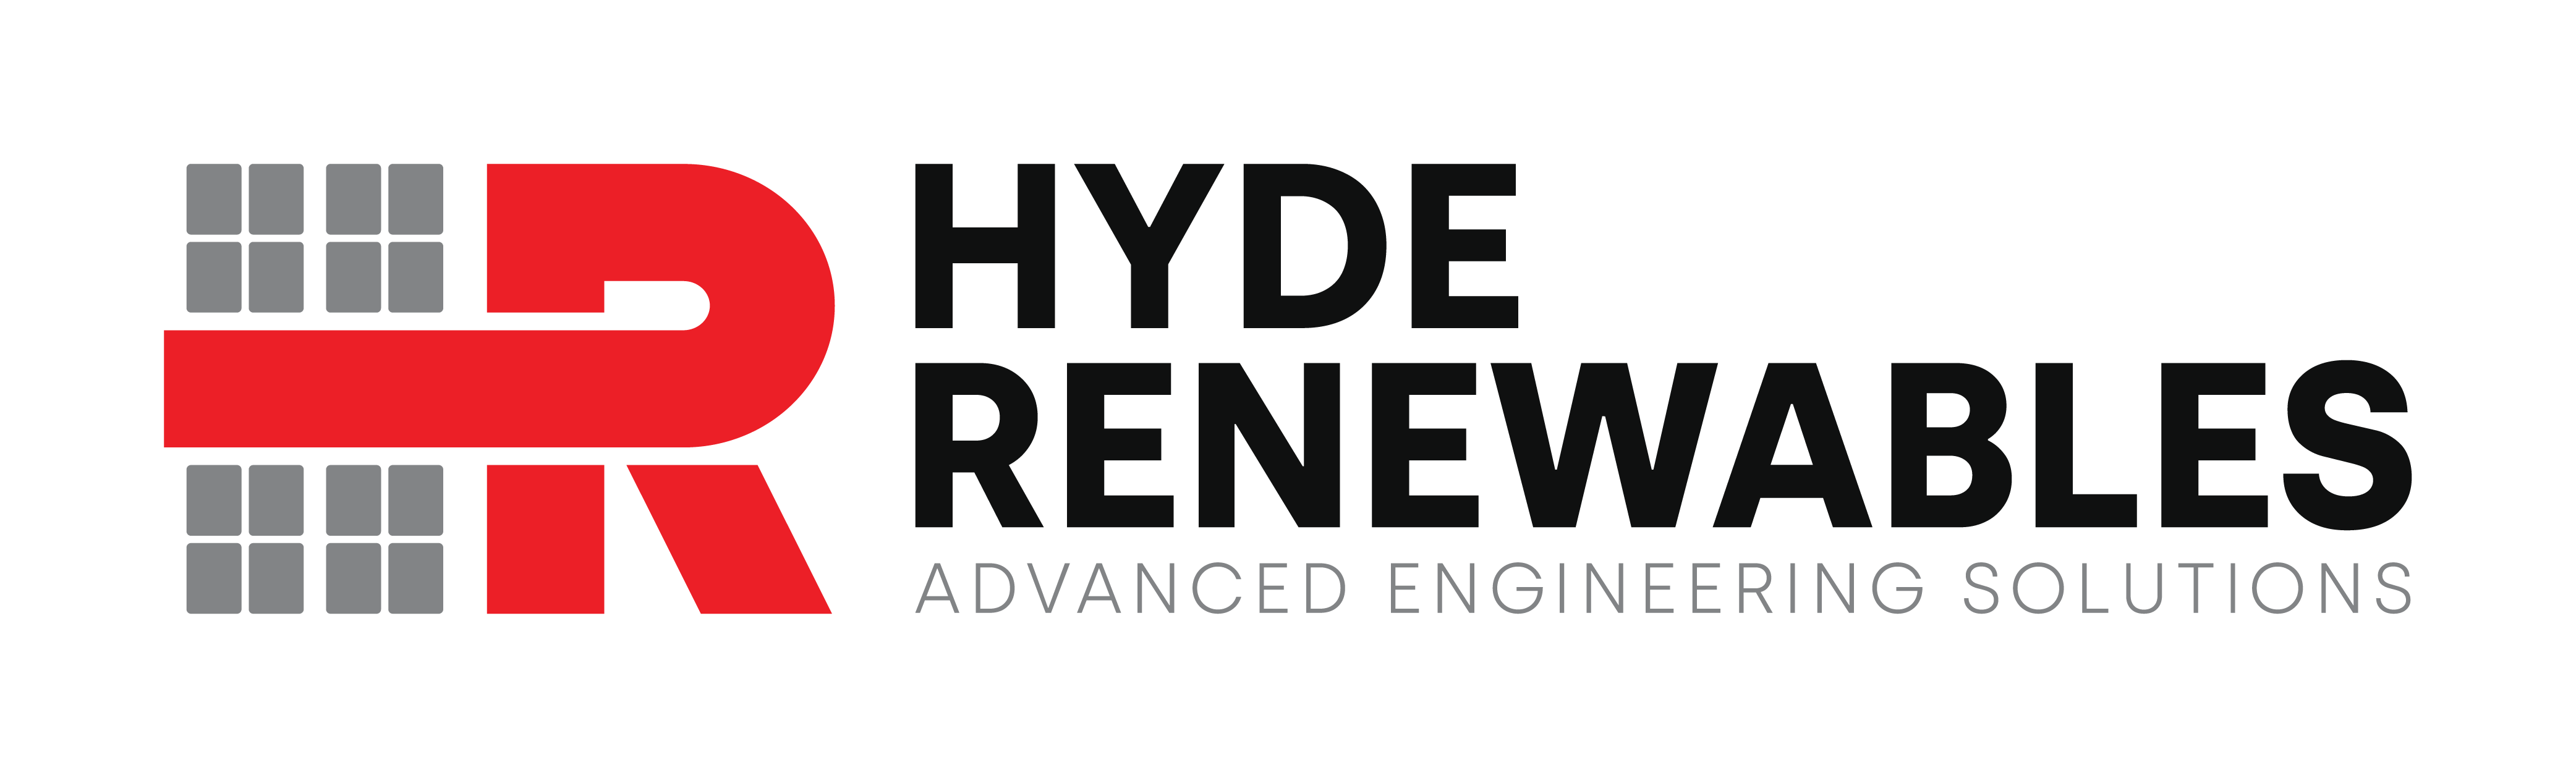 Hyde Renewables